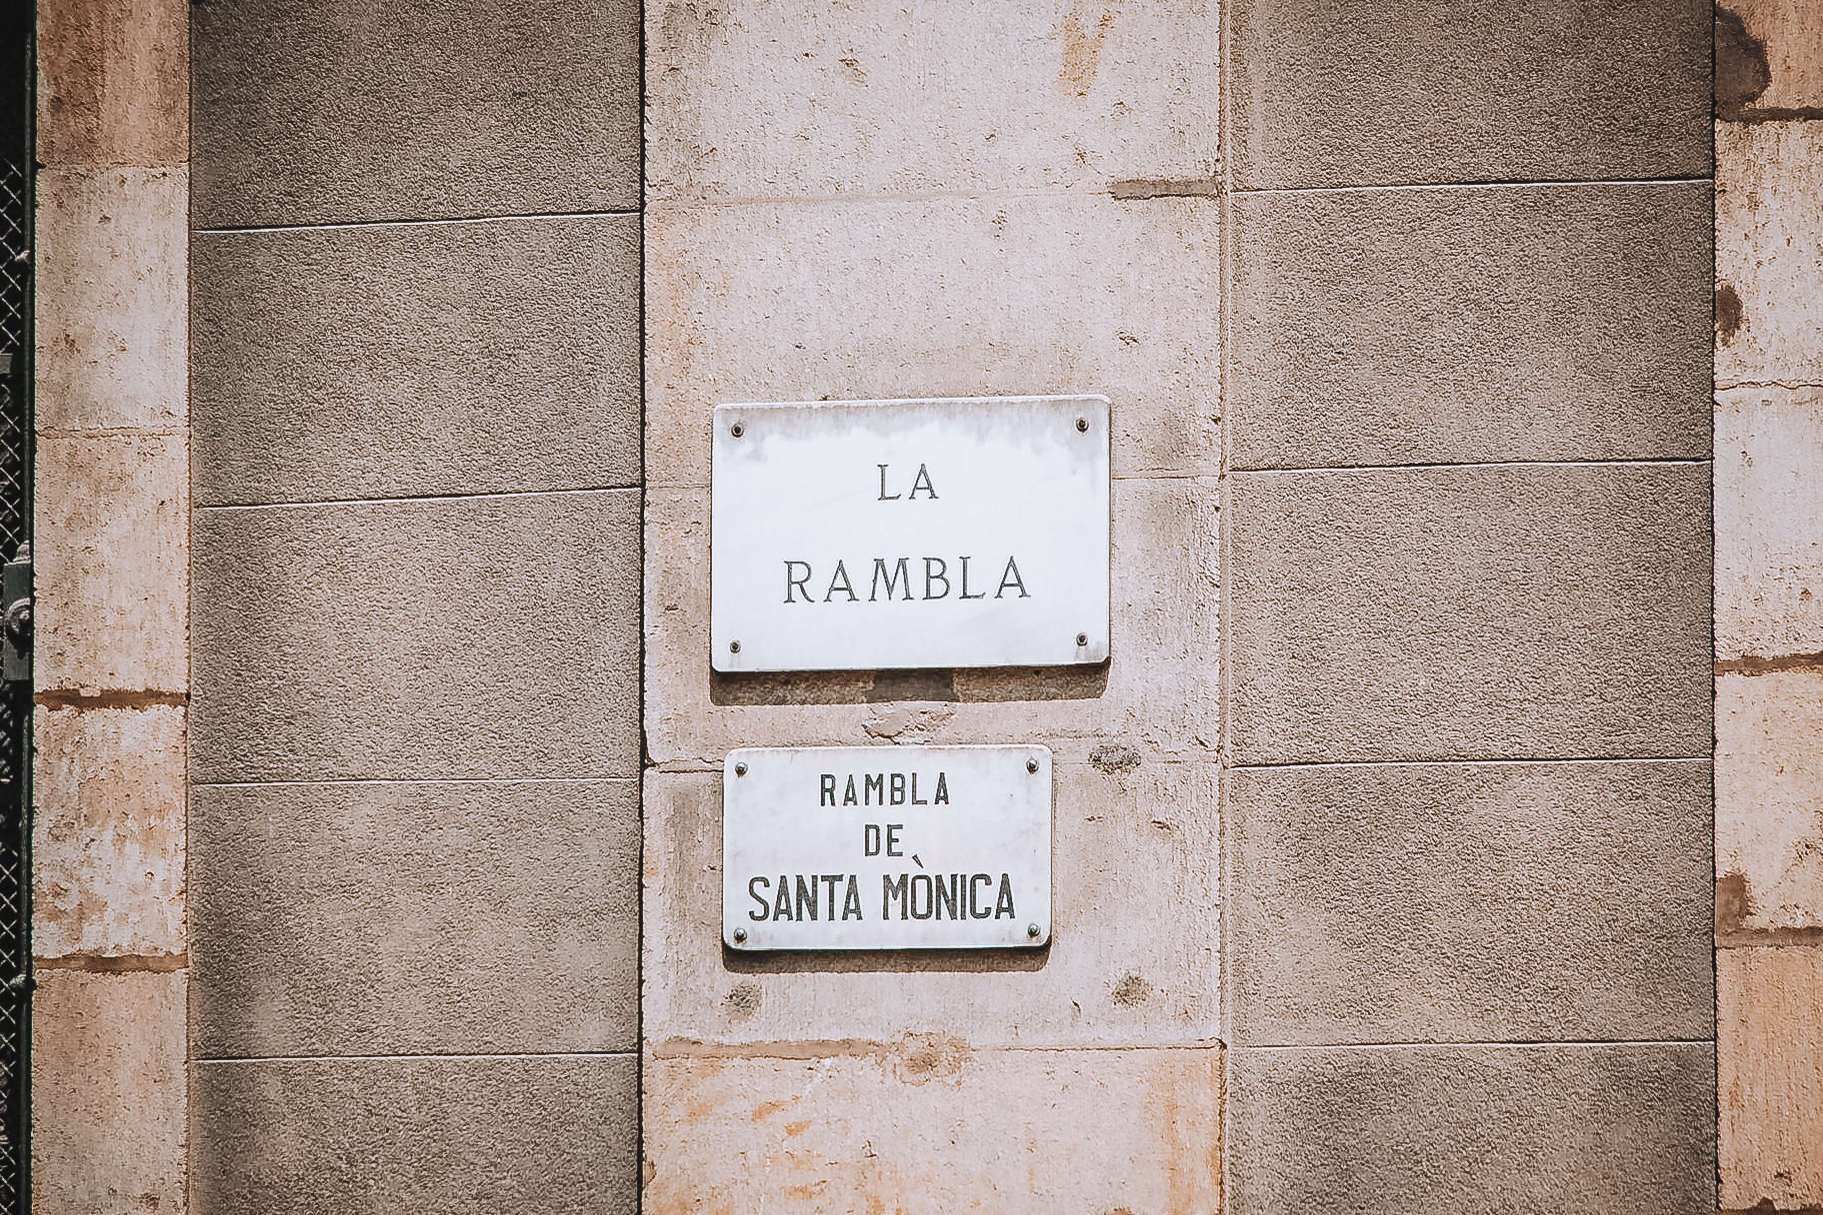 Straßenschild der Straße La Rambla in Barcelona